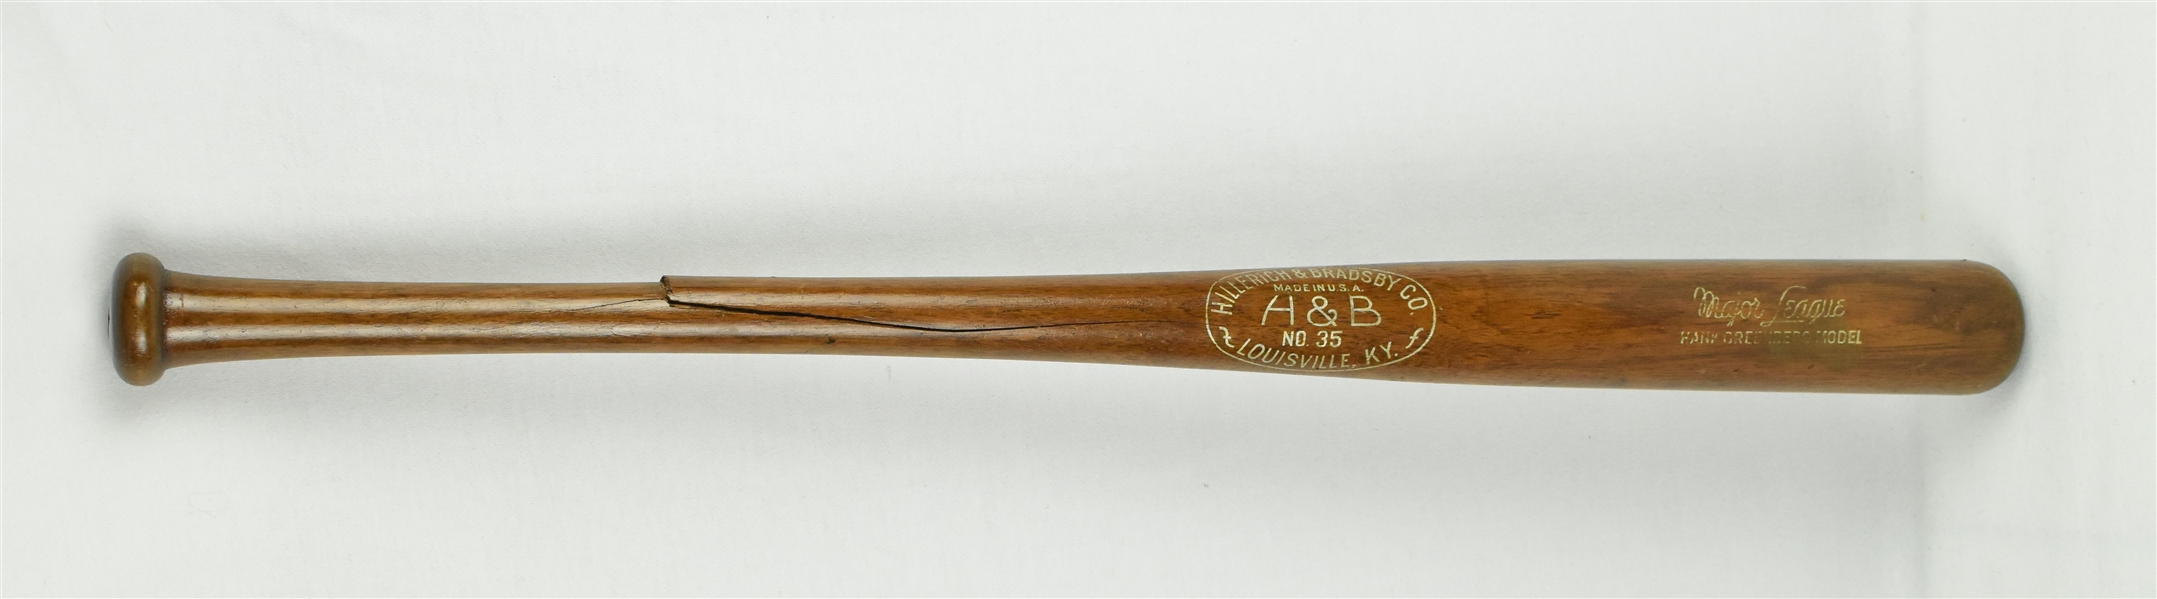 Hank Greenberg Louisville Slugger Baseball Bat